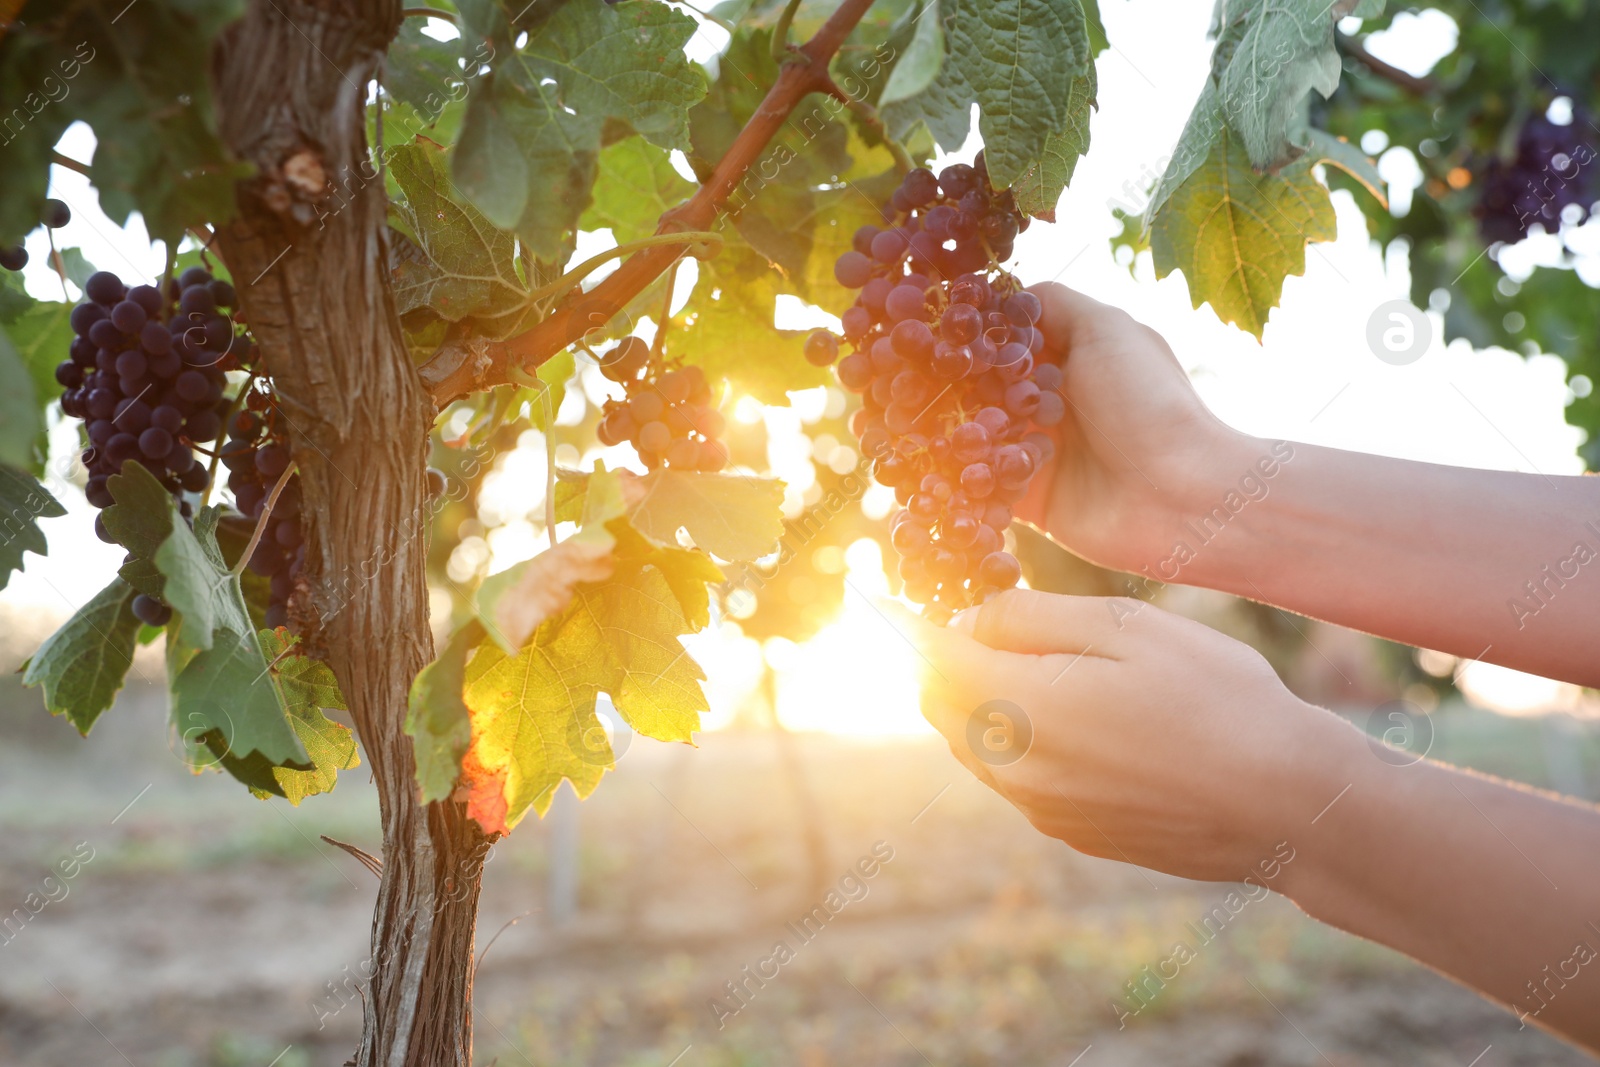 Photo of Woman picking grapes in vineyard on sunset, closeup